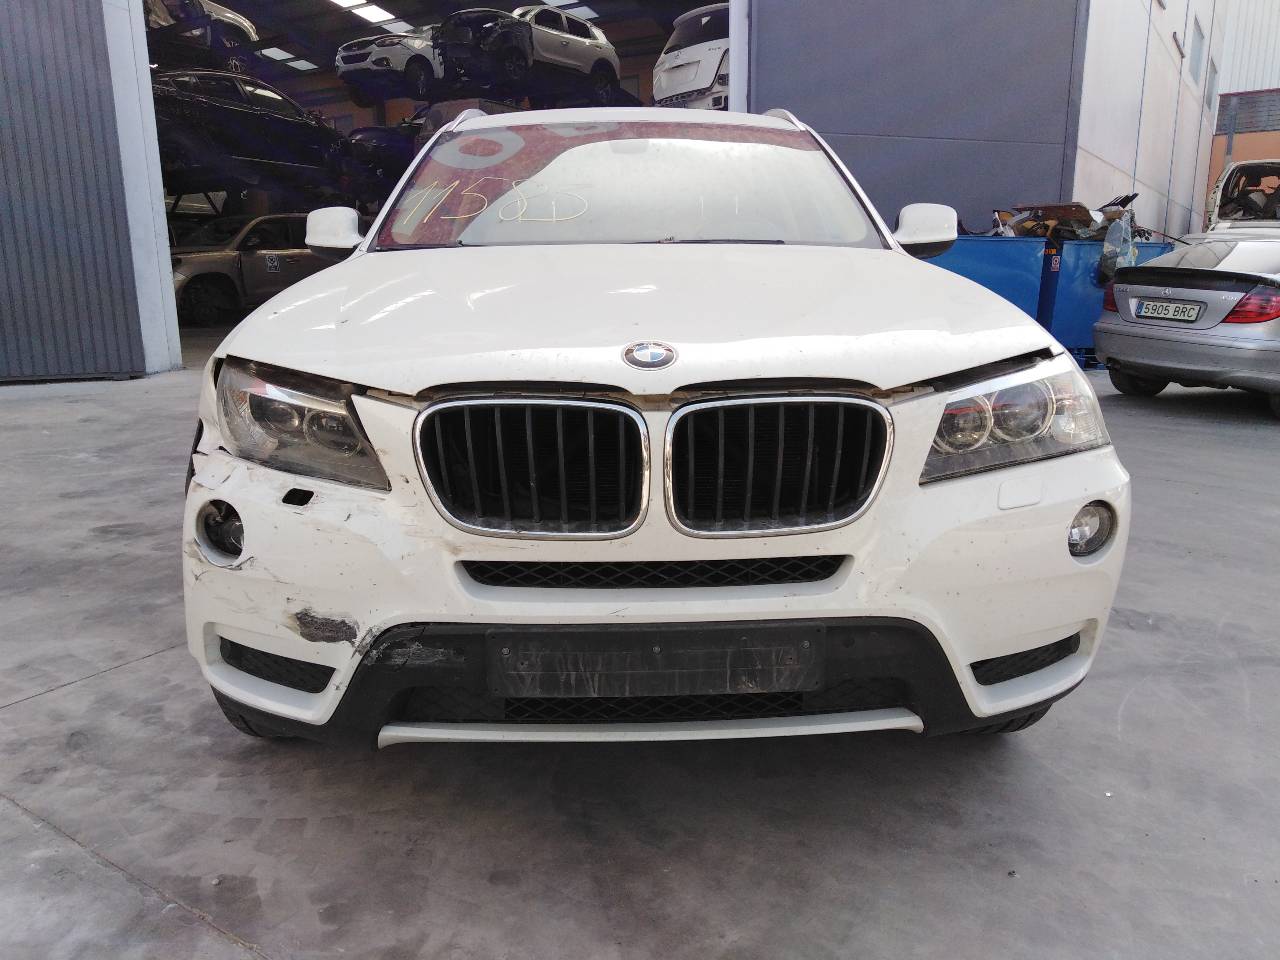 BMW X4 F26 (2014-2018) Klimato kontrolės (klimos) valdymas 6411928762902, 1201976765, E3-A2-22-1 20968917